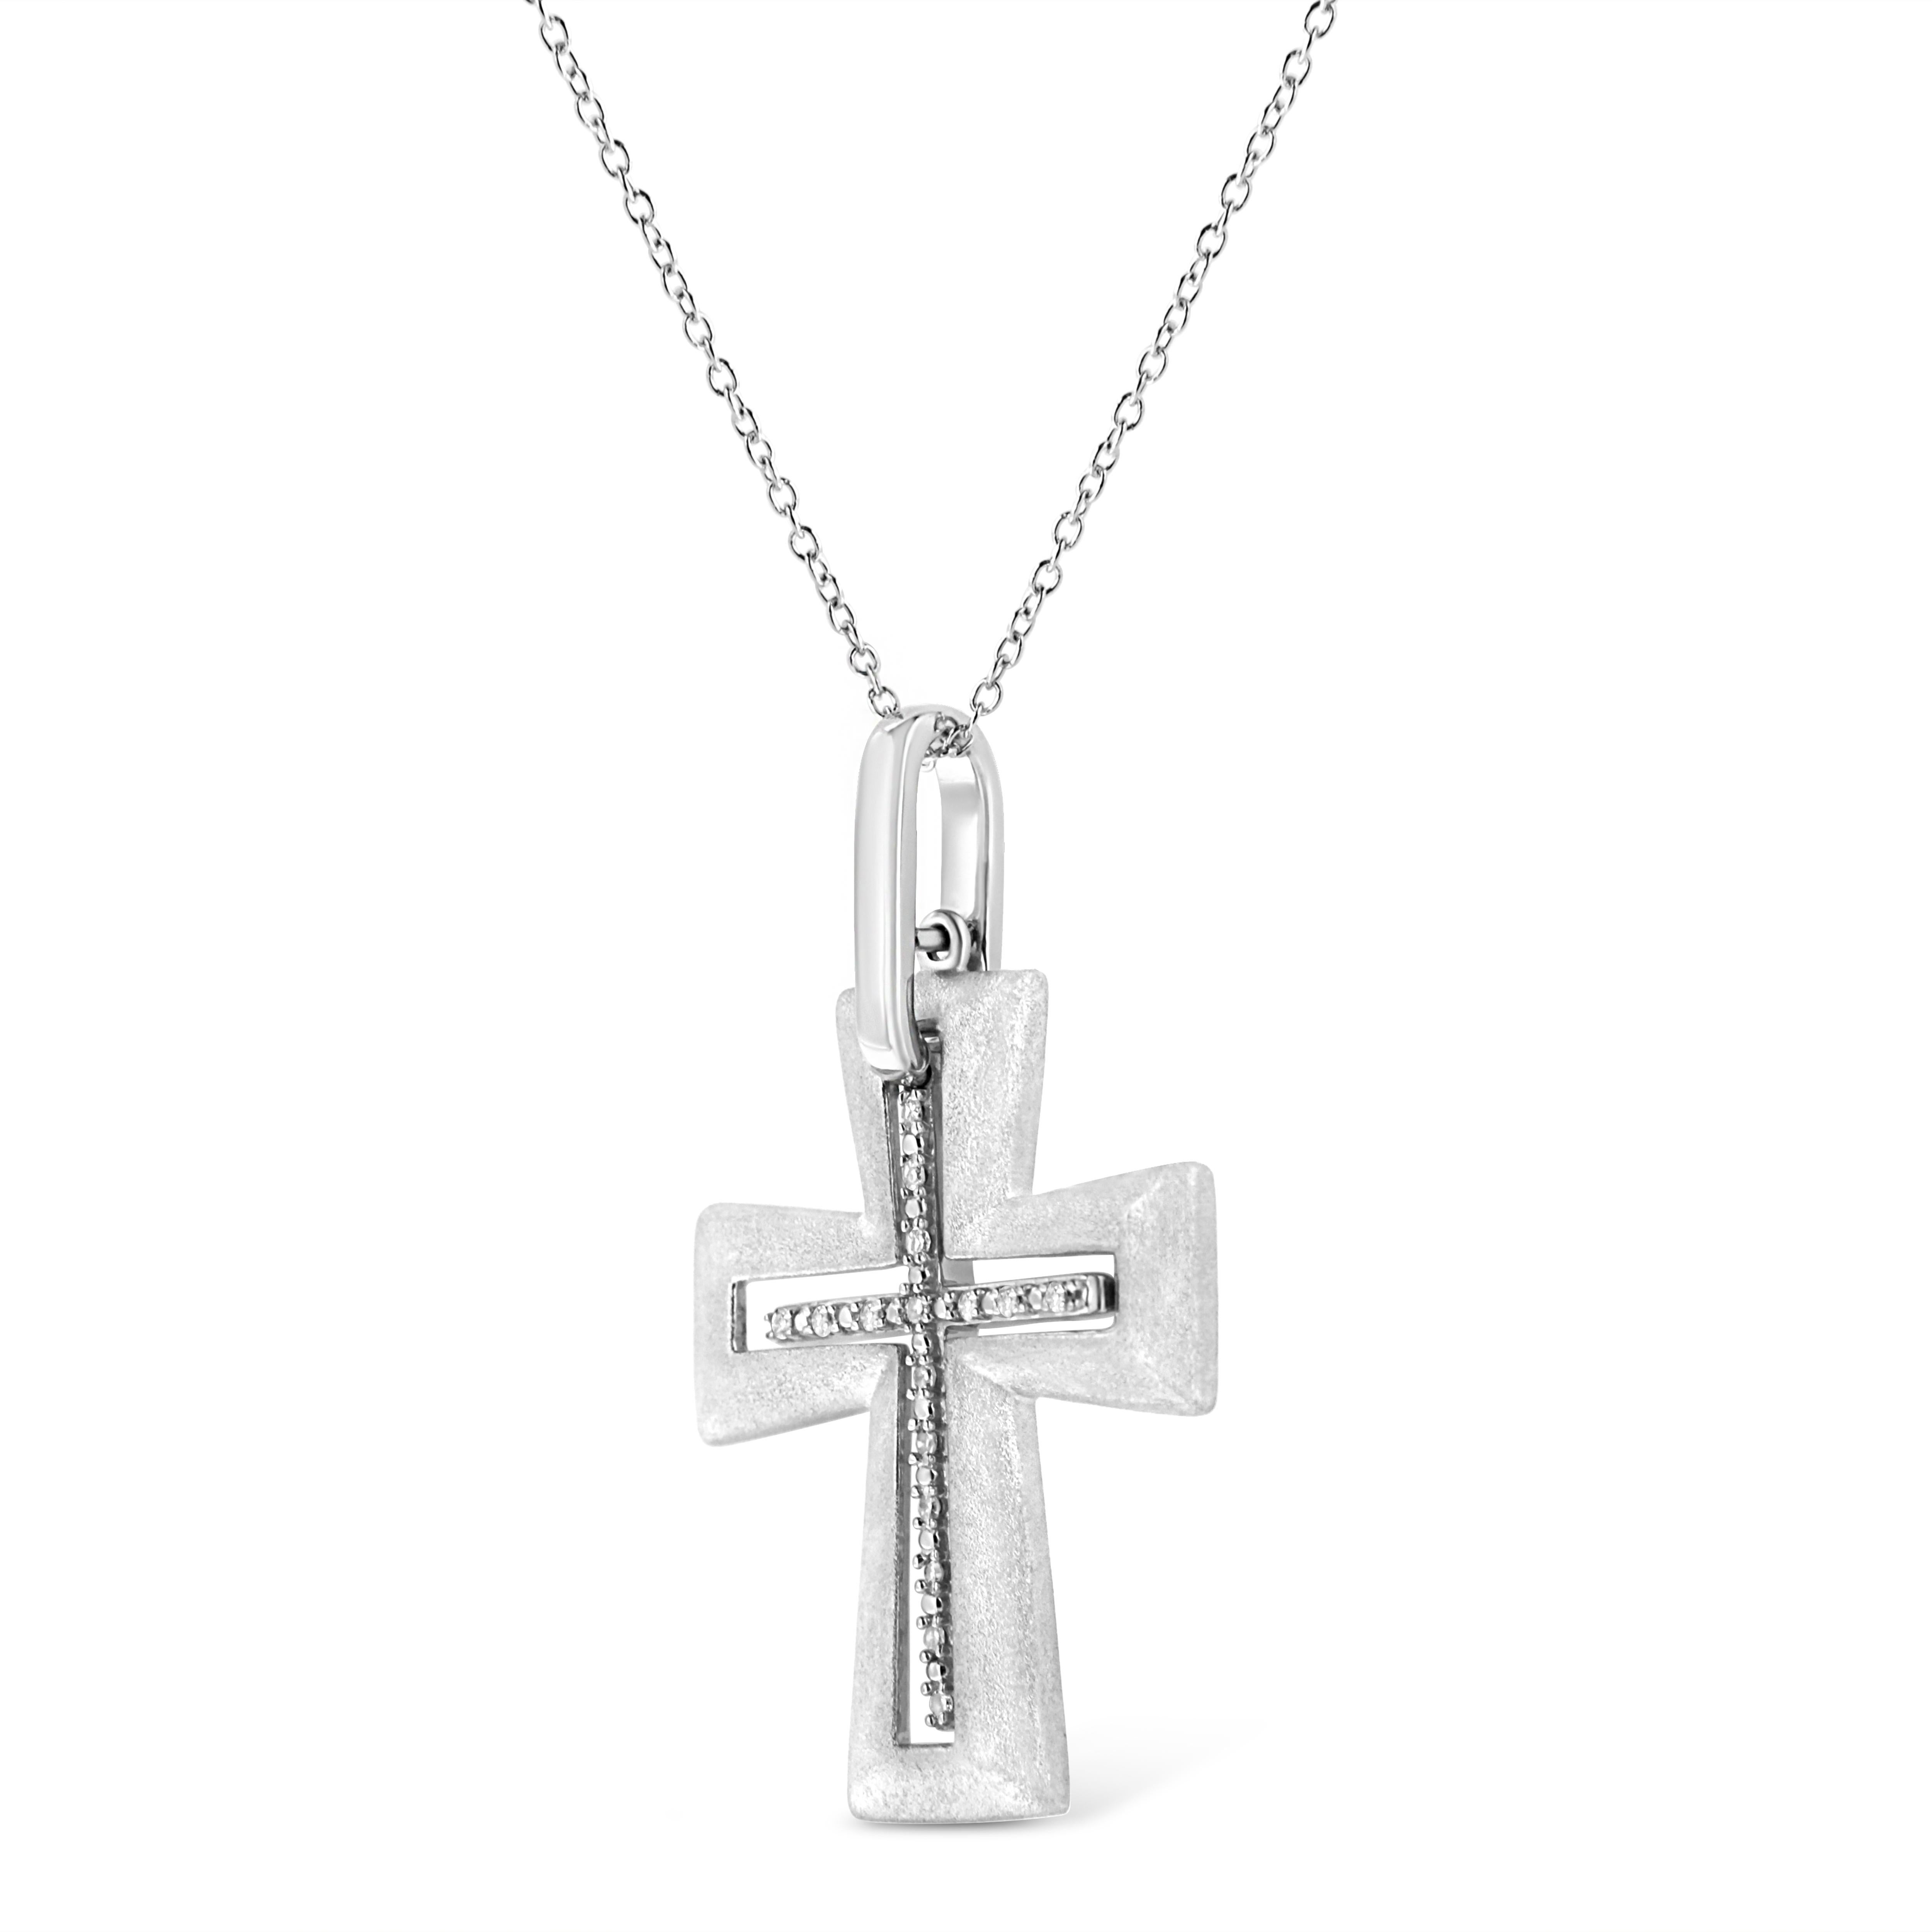 cross necklace with prayer inside